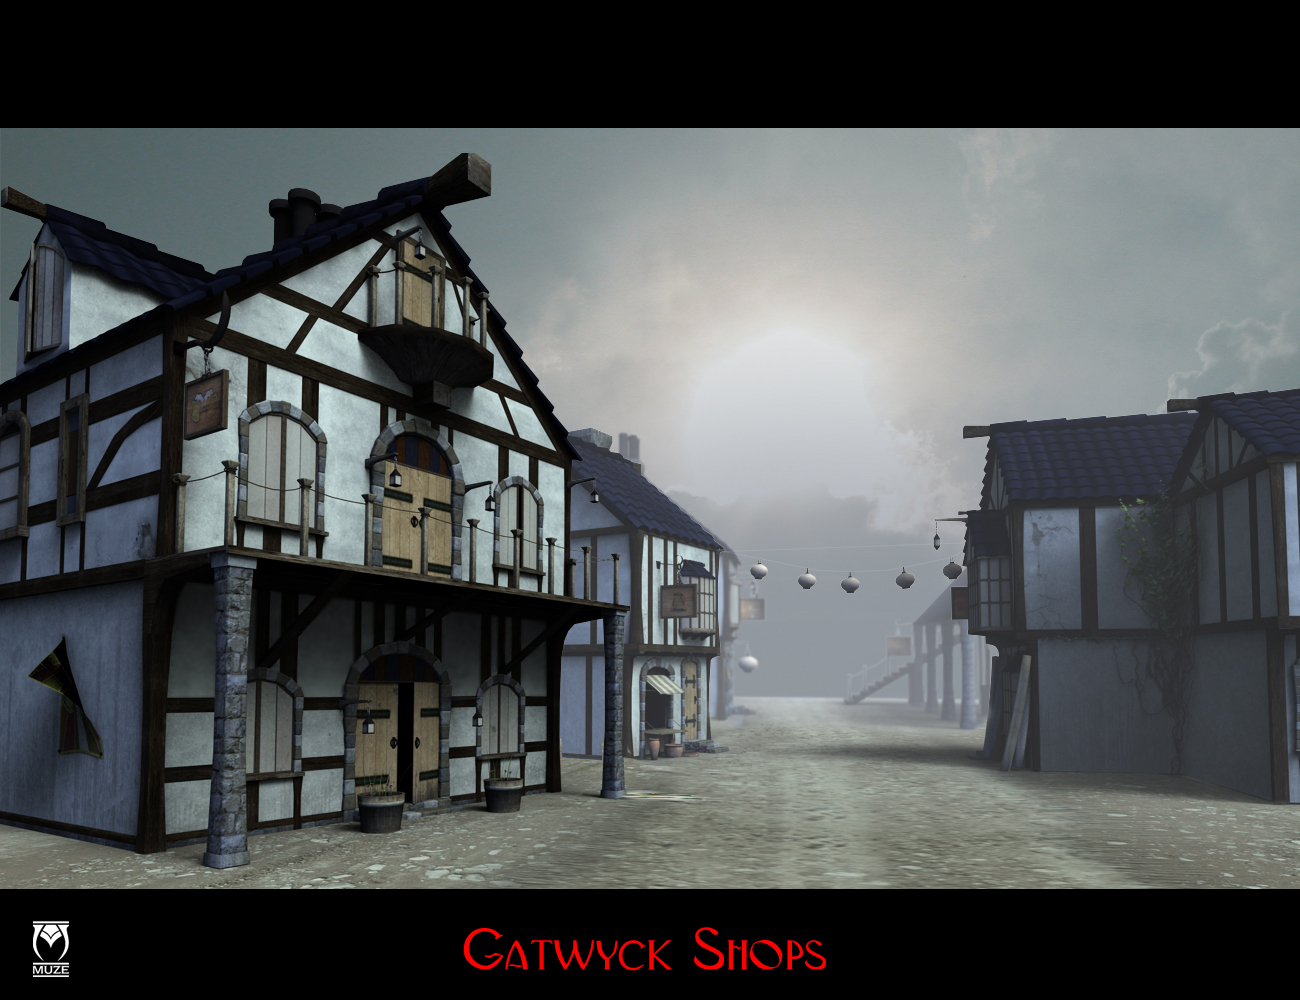 Gatwyck Shops